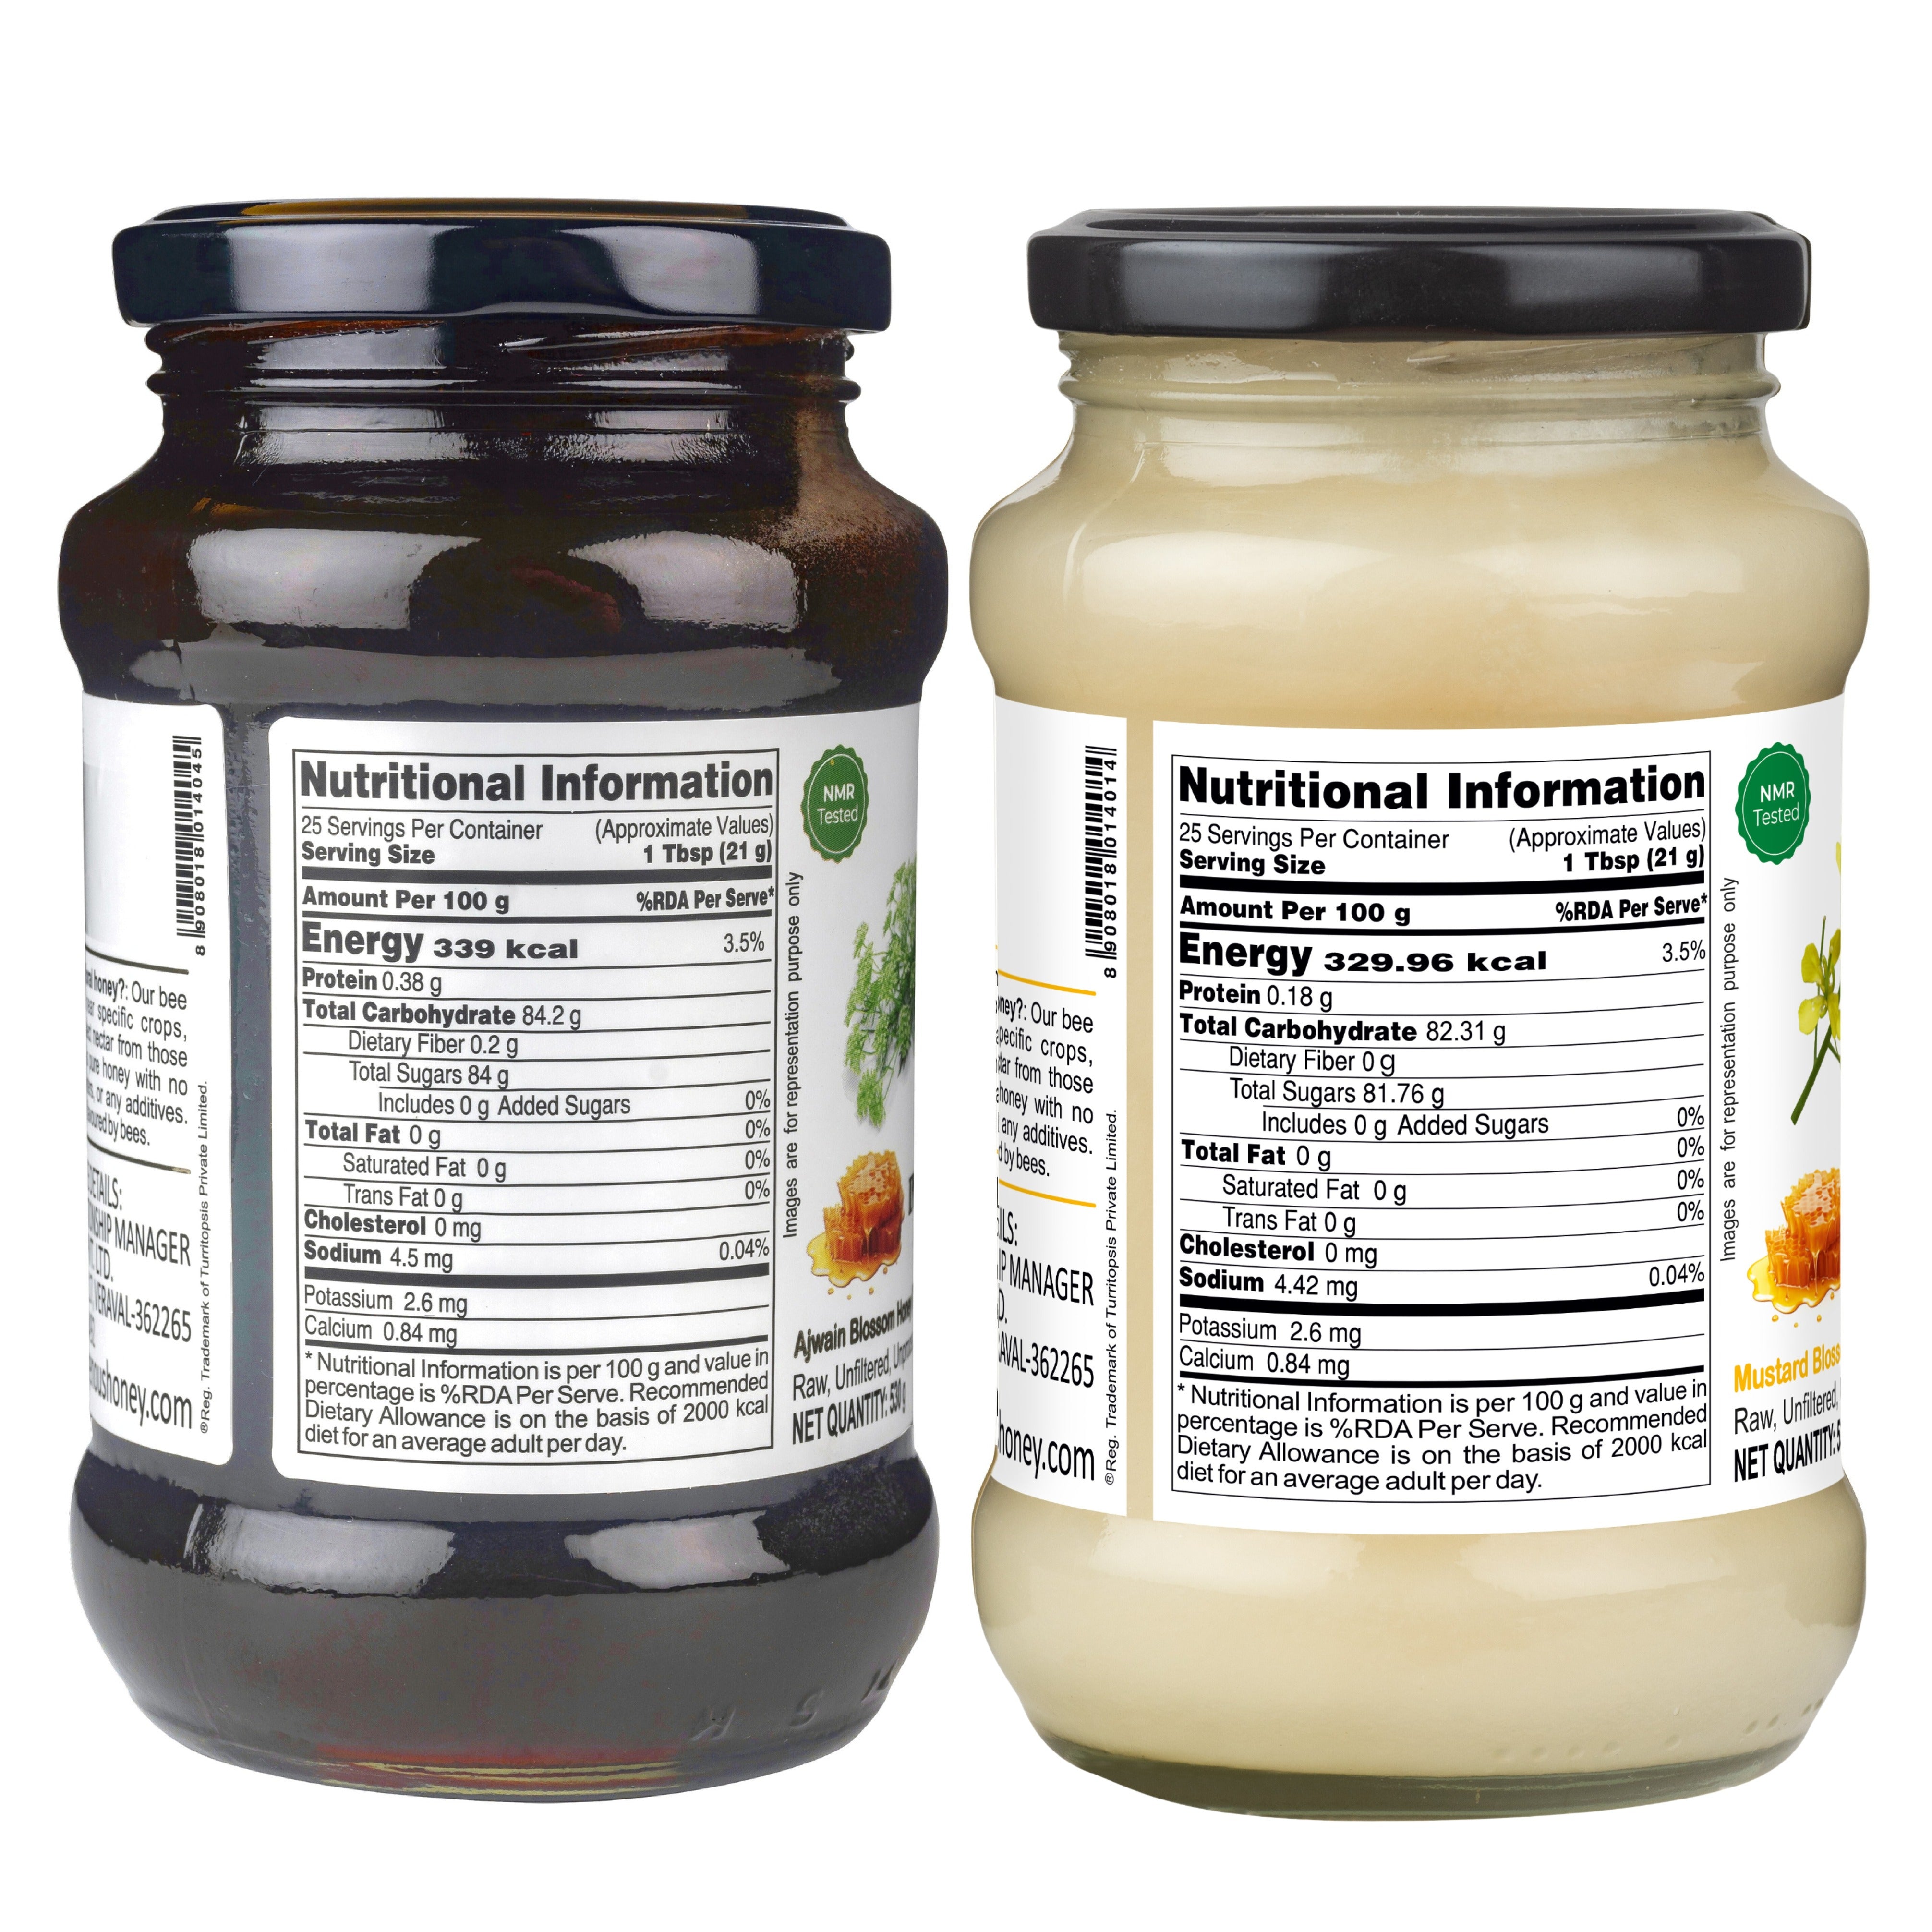 Nutritional Value of Ajwain and Mustard Honey